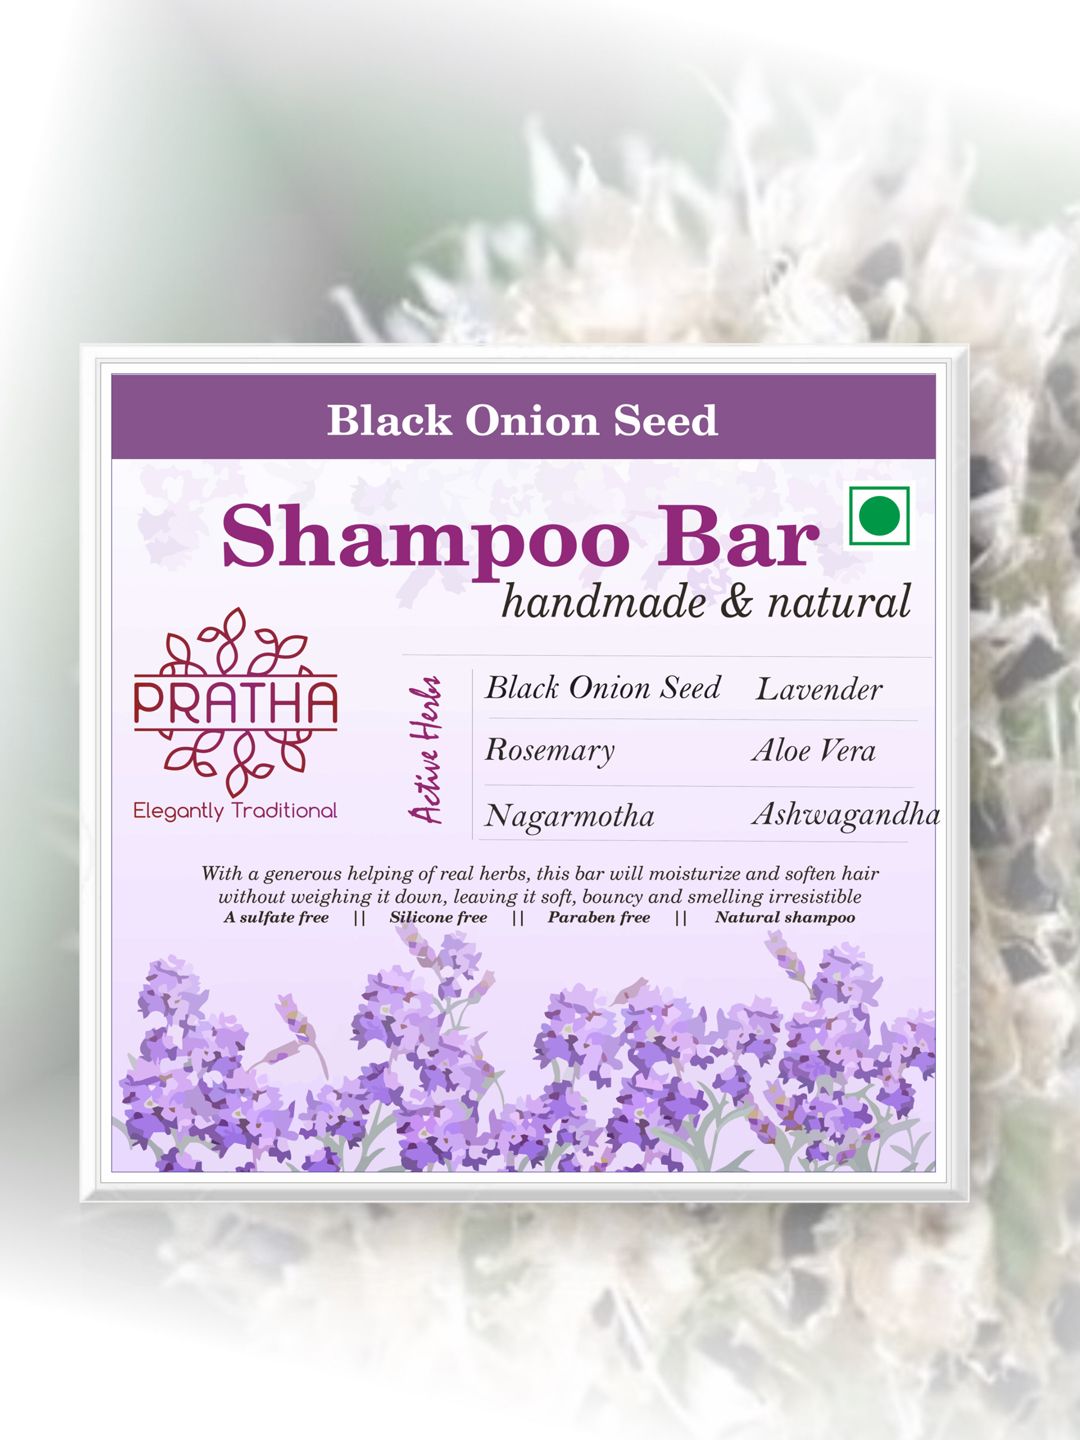 Pratha Unisex Black Onion Seed Anti Dandruff Shampoo Bar Price in India